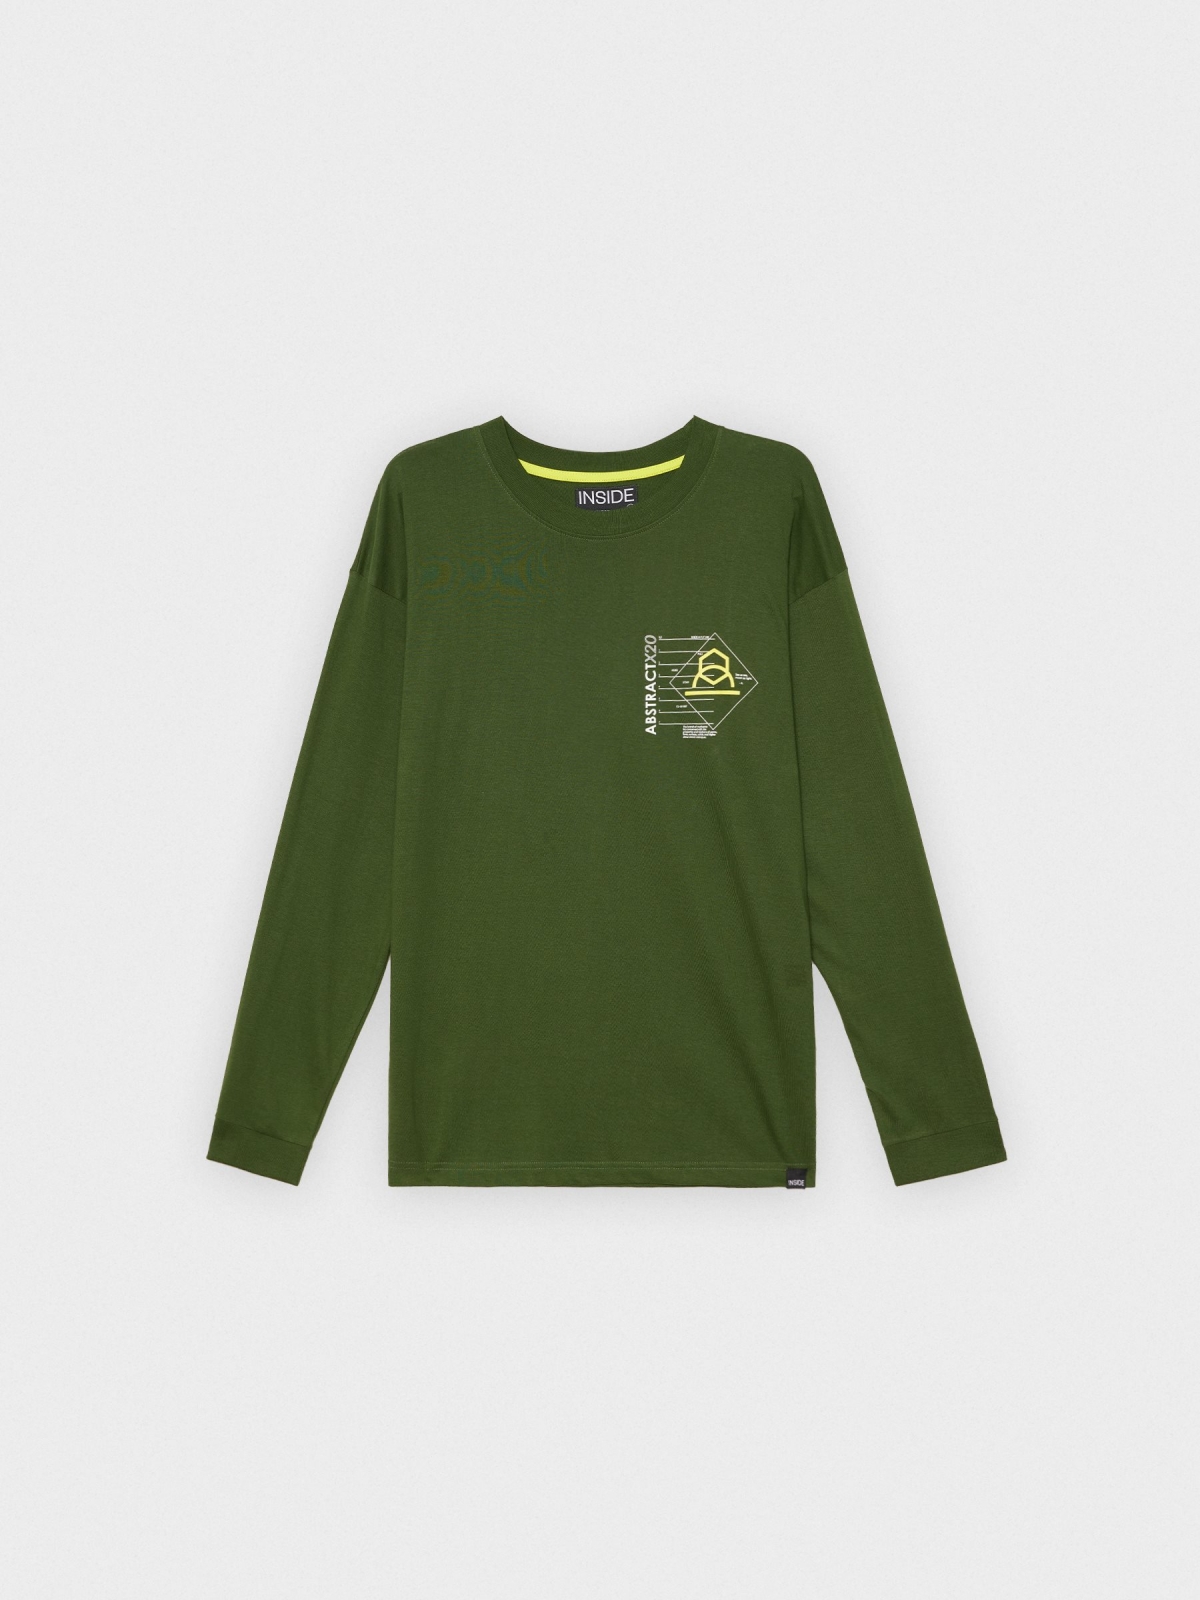  Camiseta print ABSTRACT verde oscuro